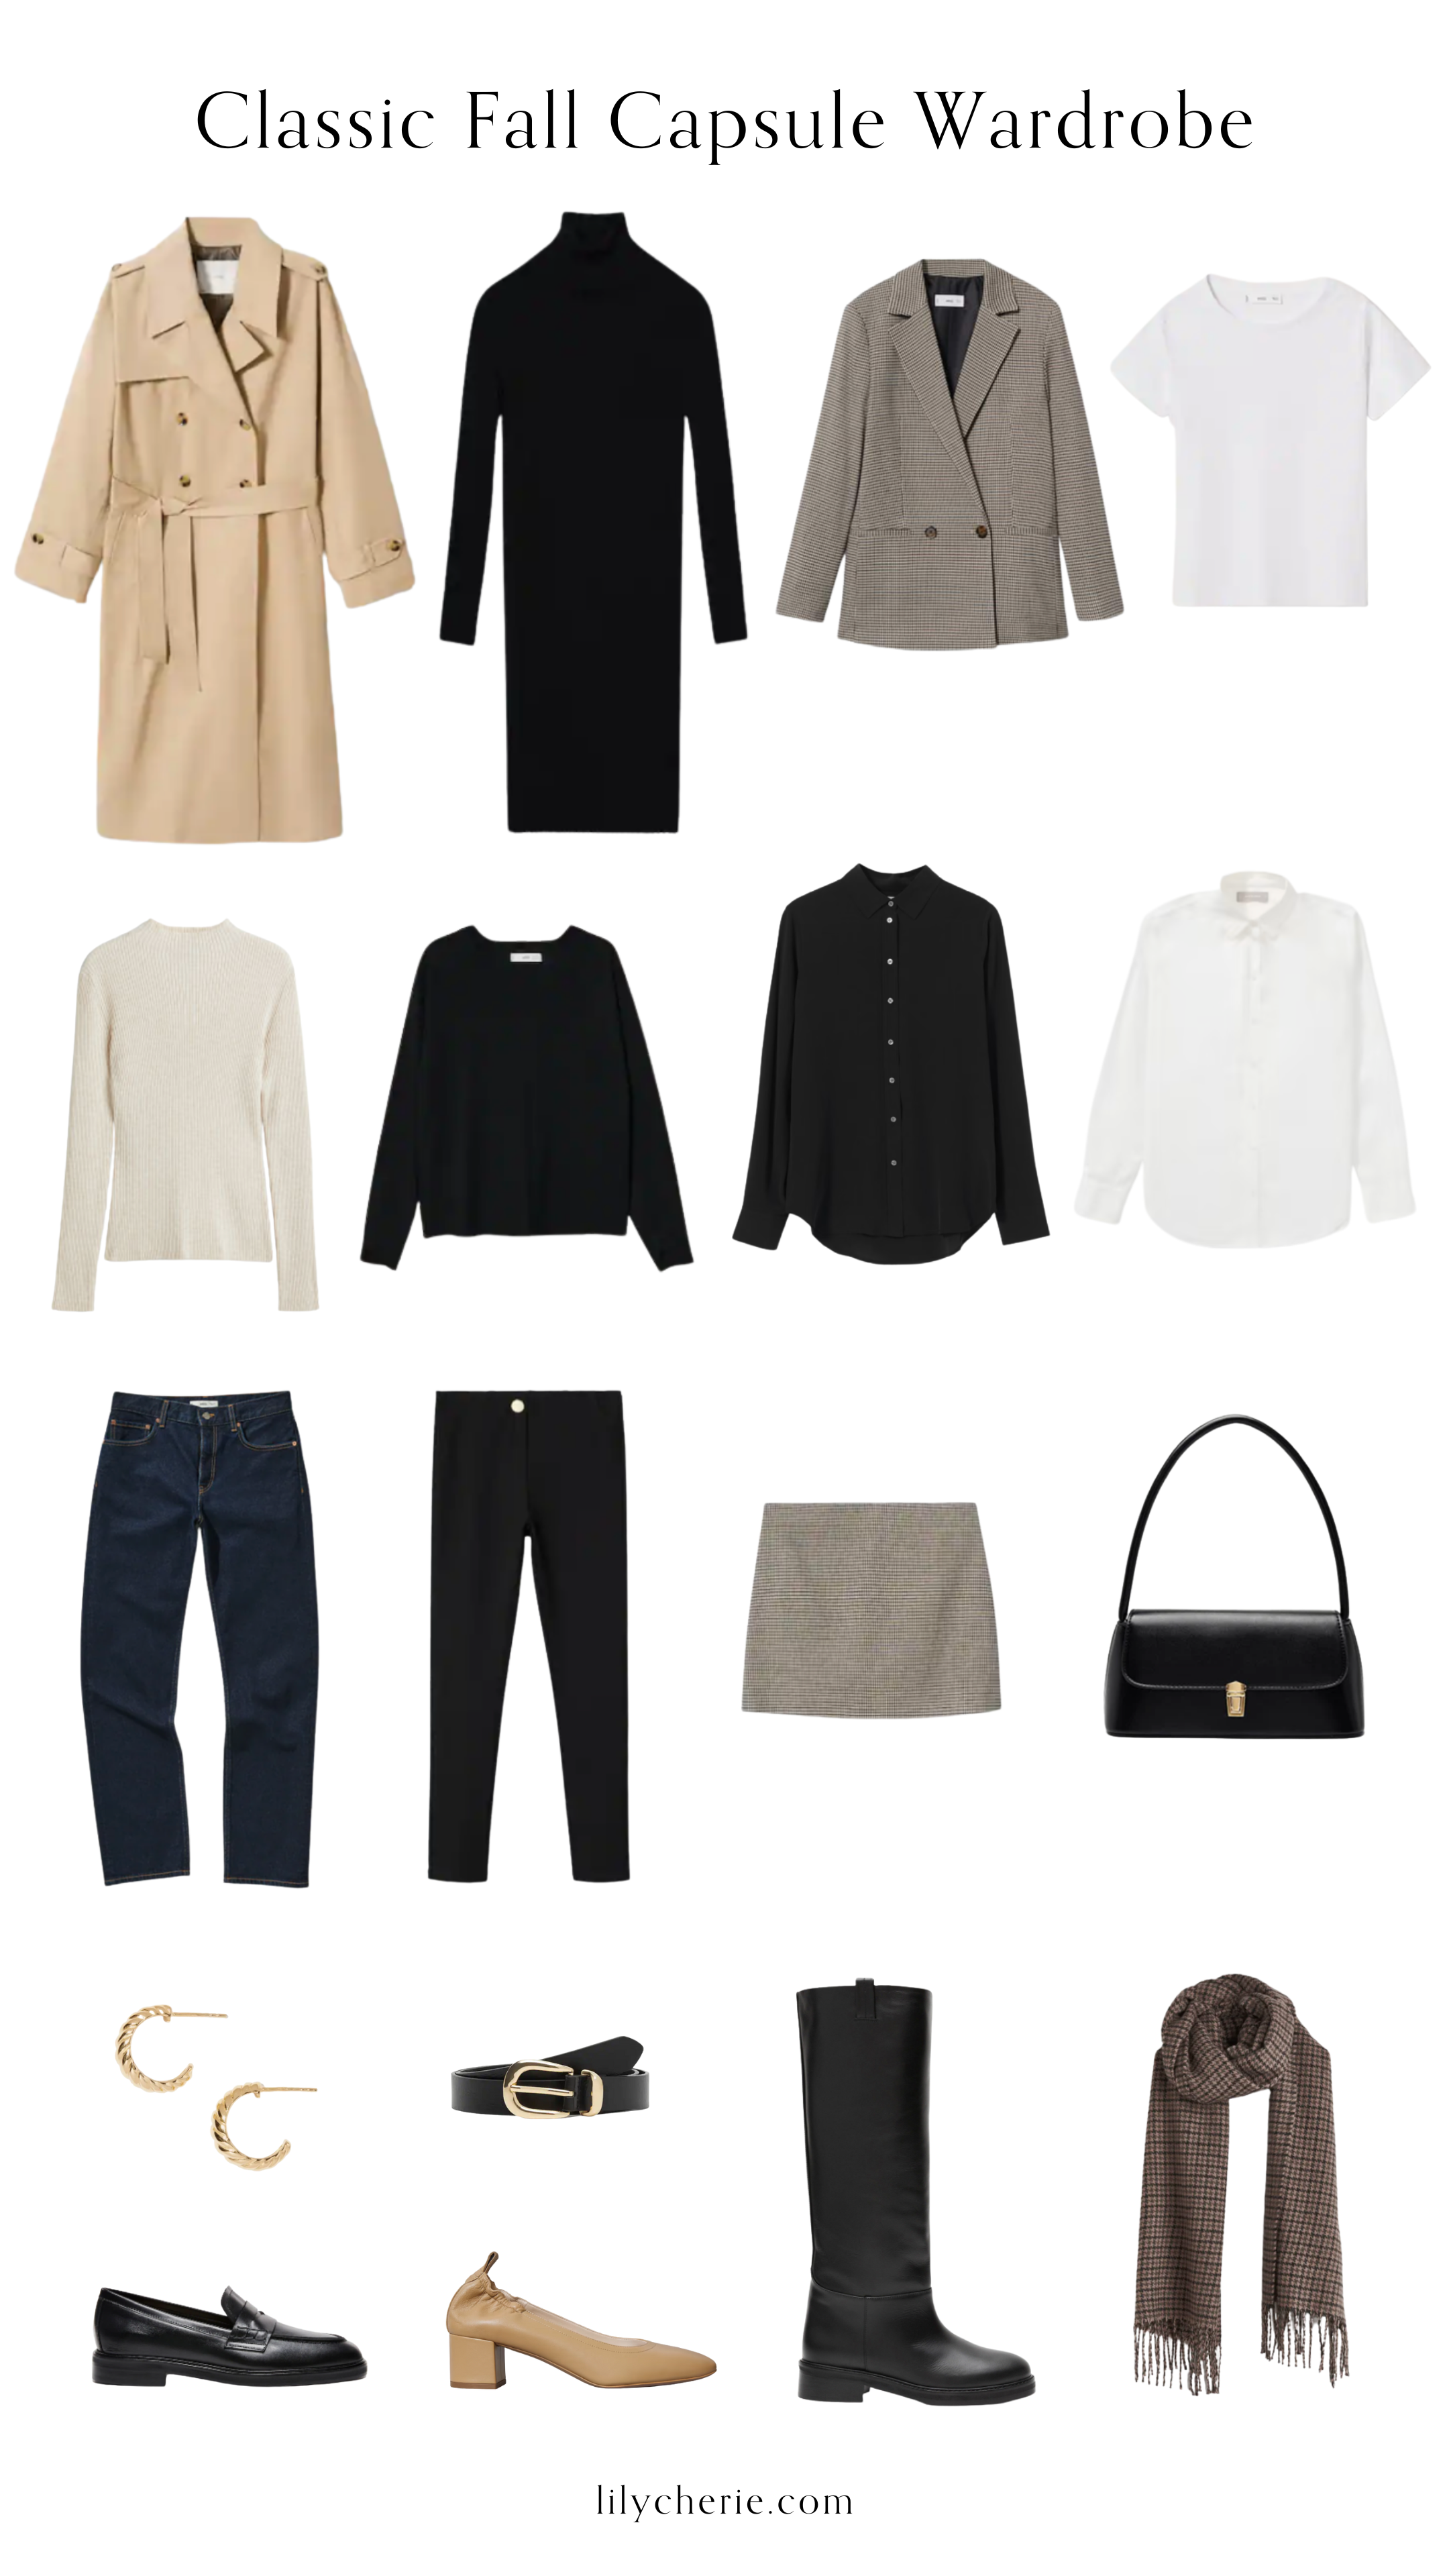 Fall Wardrobe Essentials